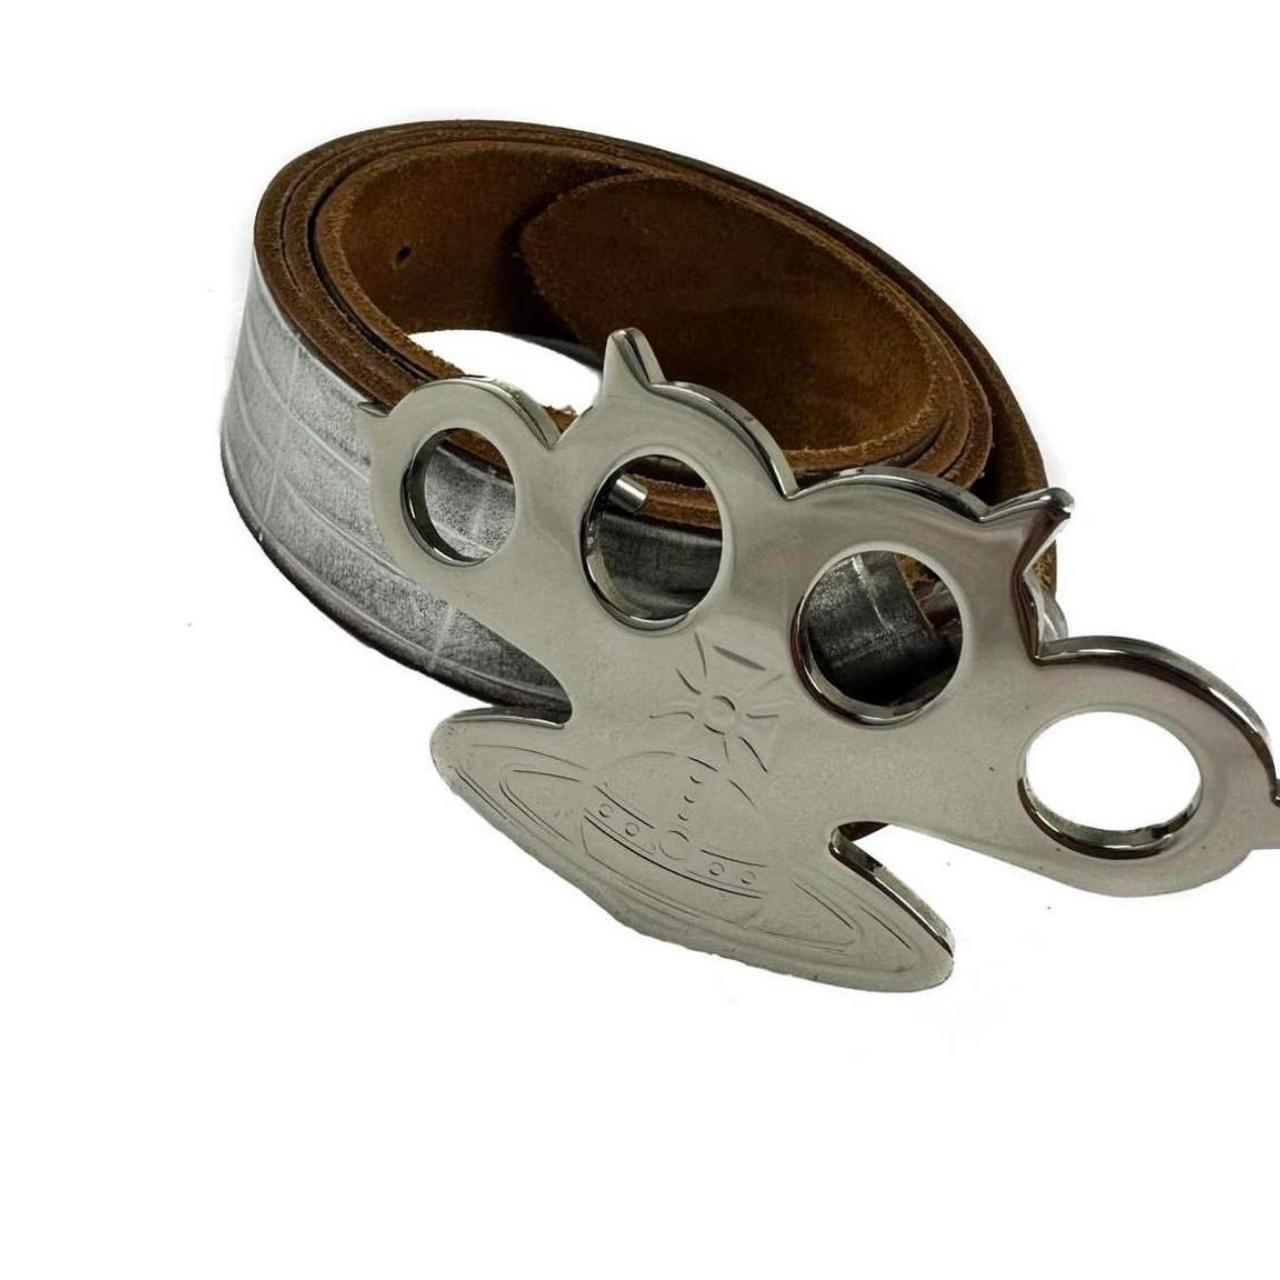 Vivienne Westwood Brass Knuckle Orb Leather... - Depop